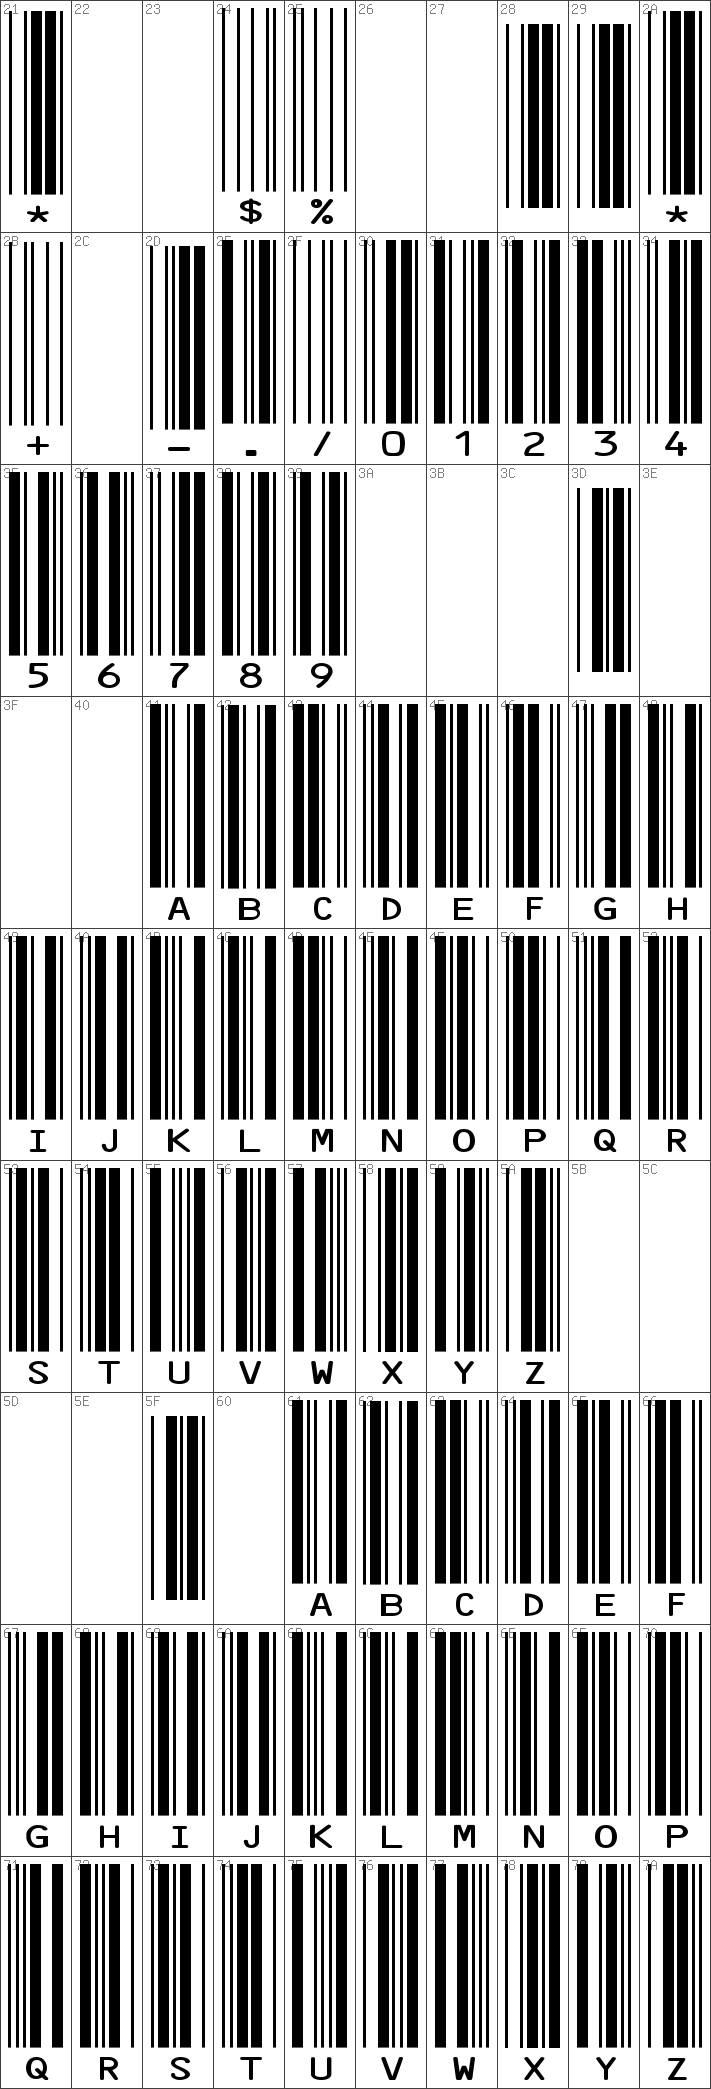 39 barcode font free